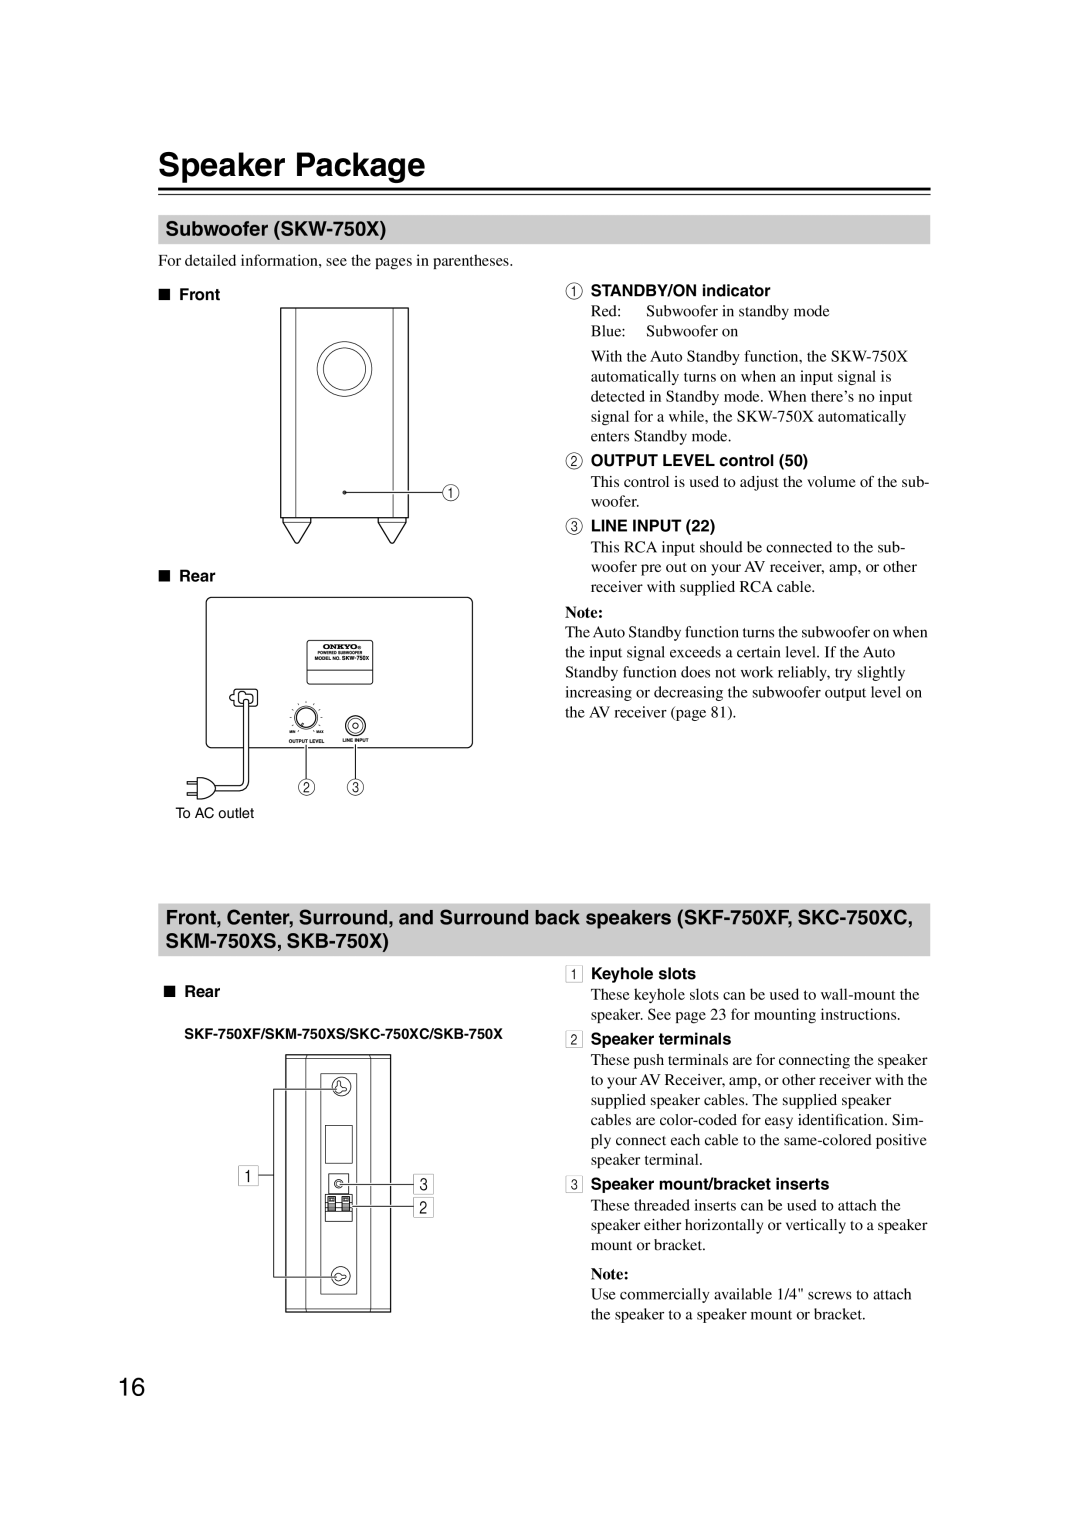 Onkyo HT-S6100 instruction manual Speaker Package, Subwoofer SKW-750X 